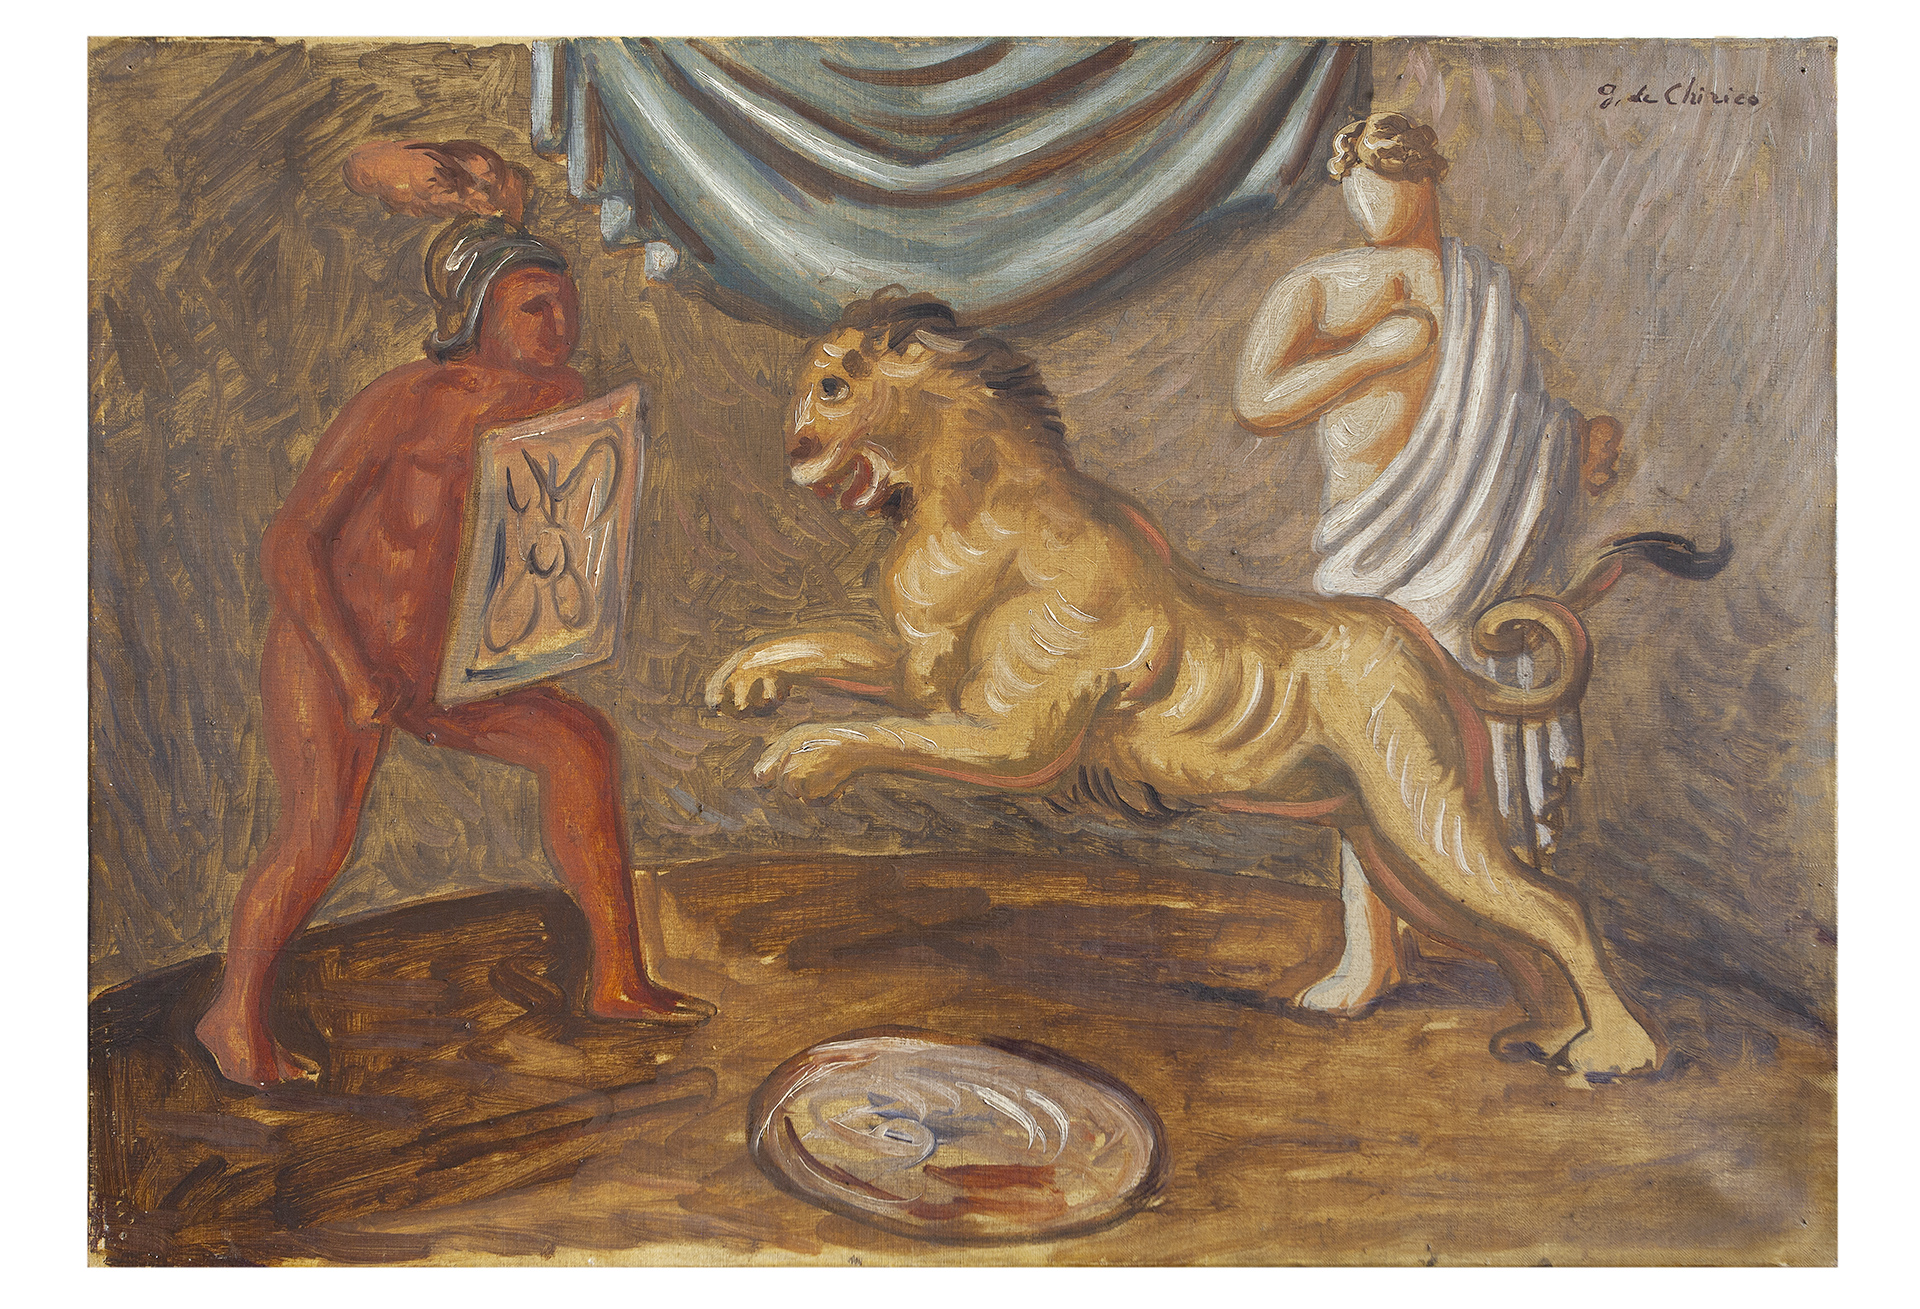 Giorgio de Chirico
Gladiateur et lion, 1929